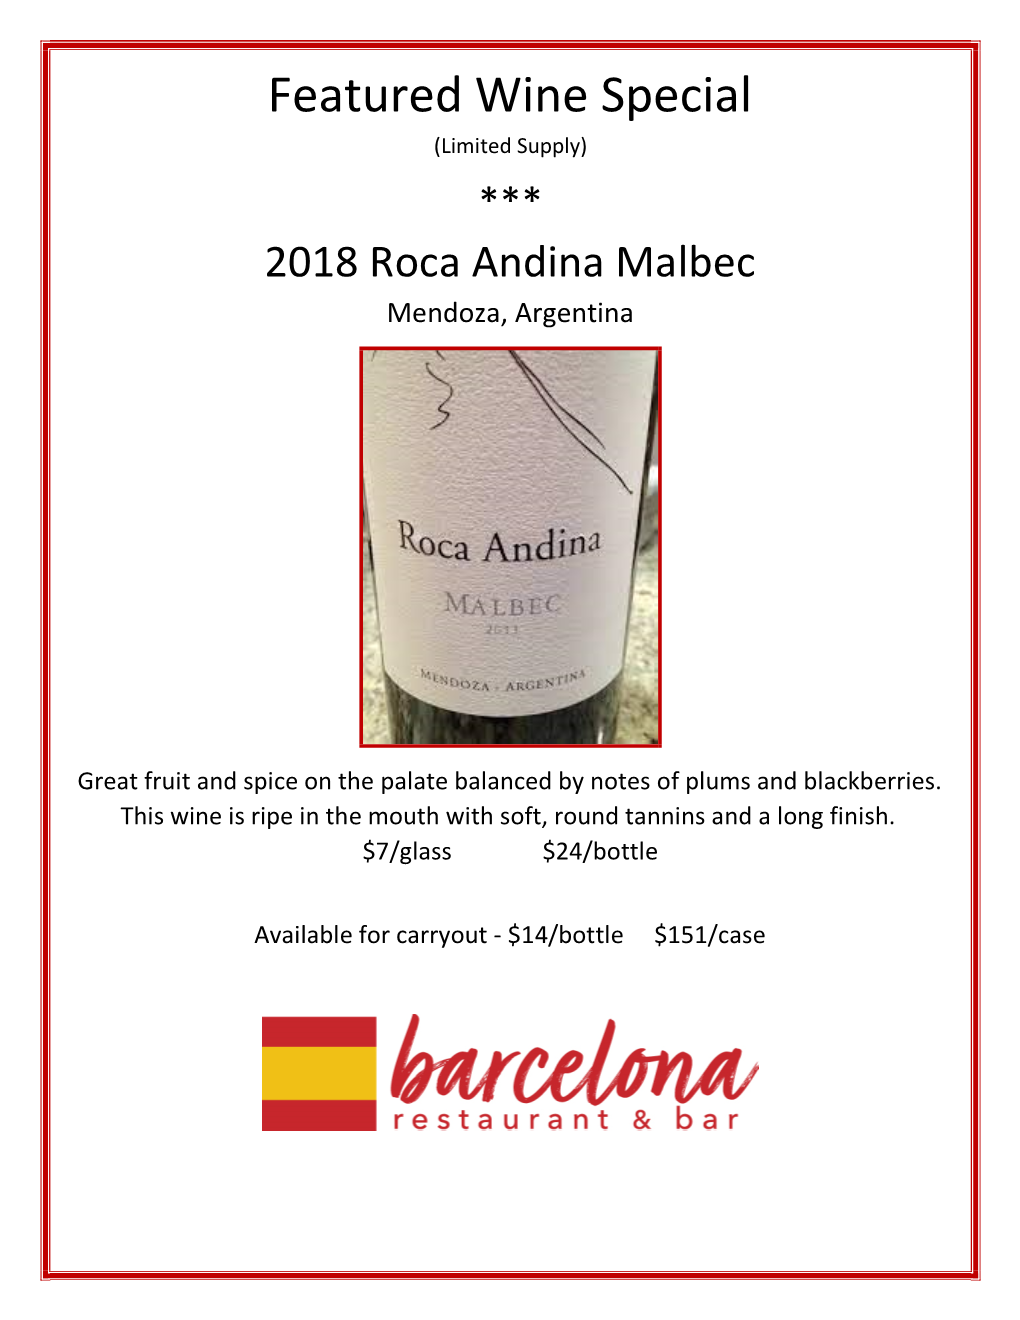 Featured Wine Special (Limited Supply) *** 2018 Roca Andina Malbec Mendoza, Argentina